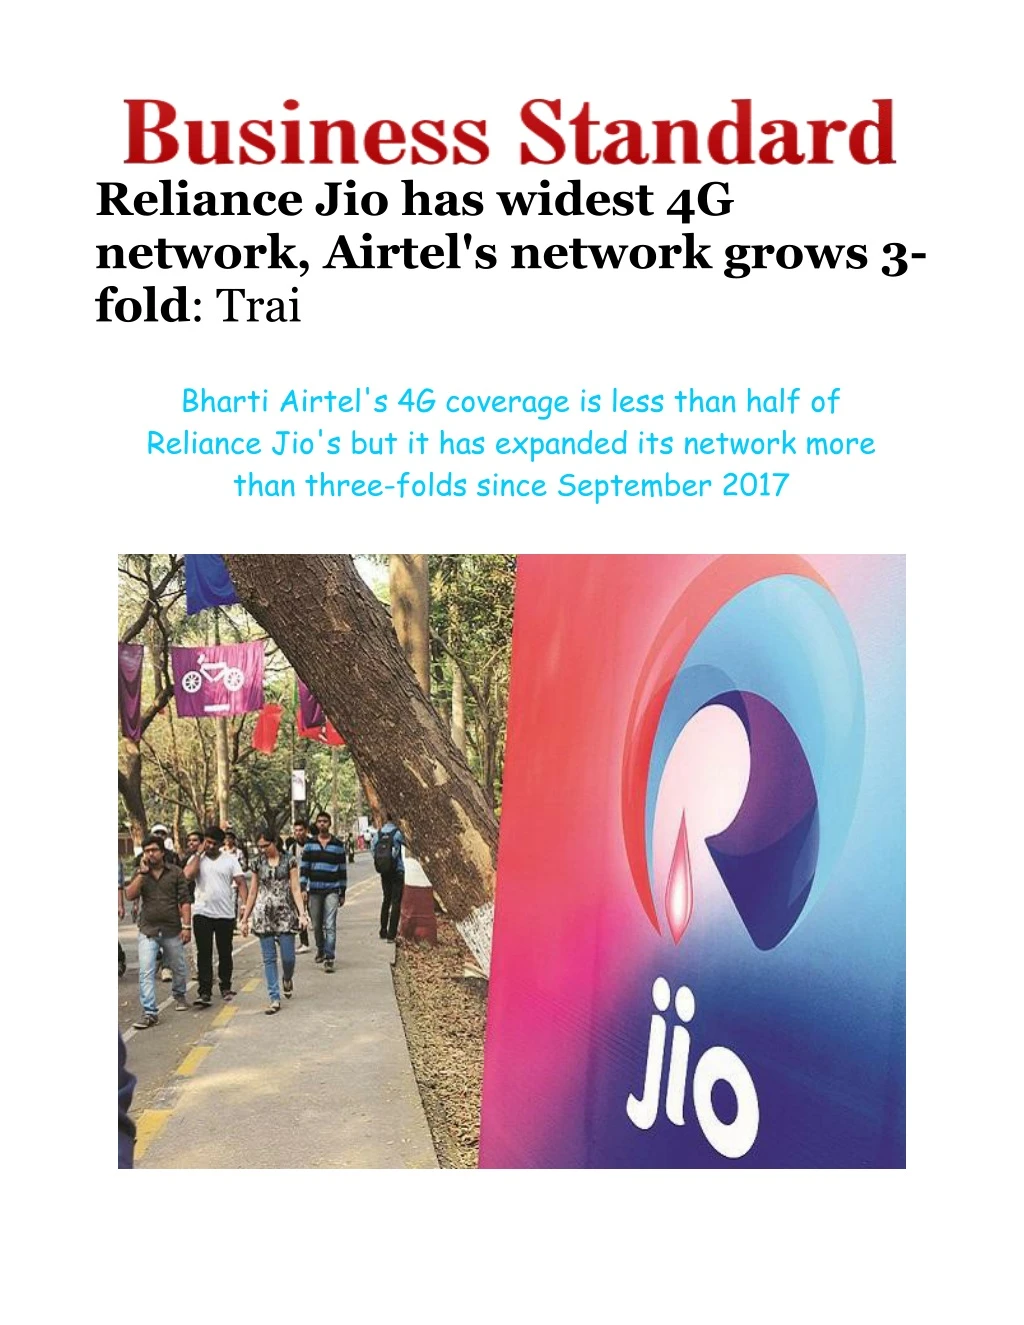 reliance jio has widest 4g network airtel